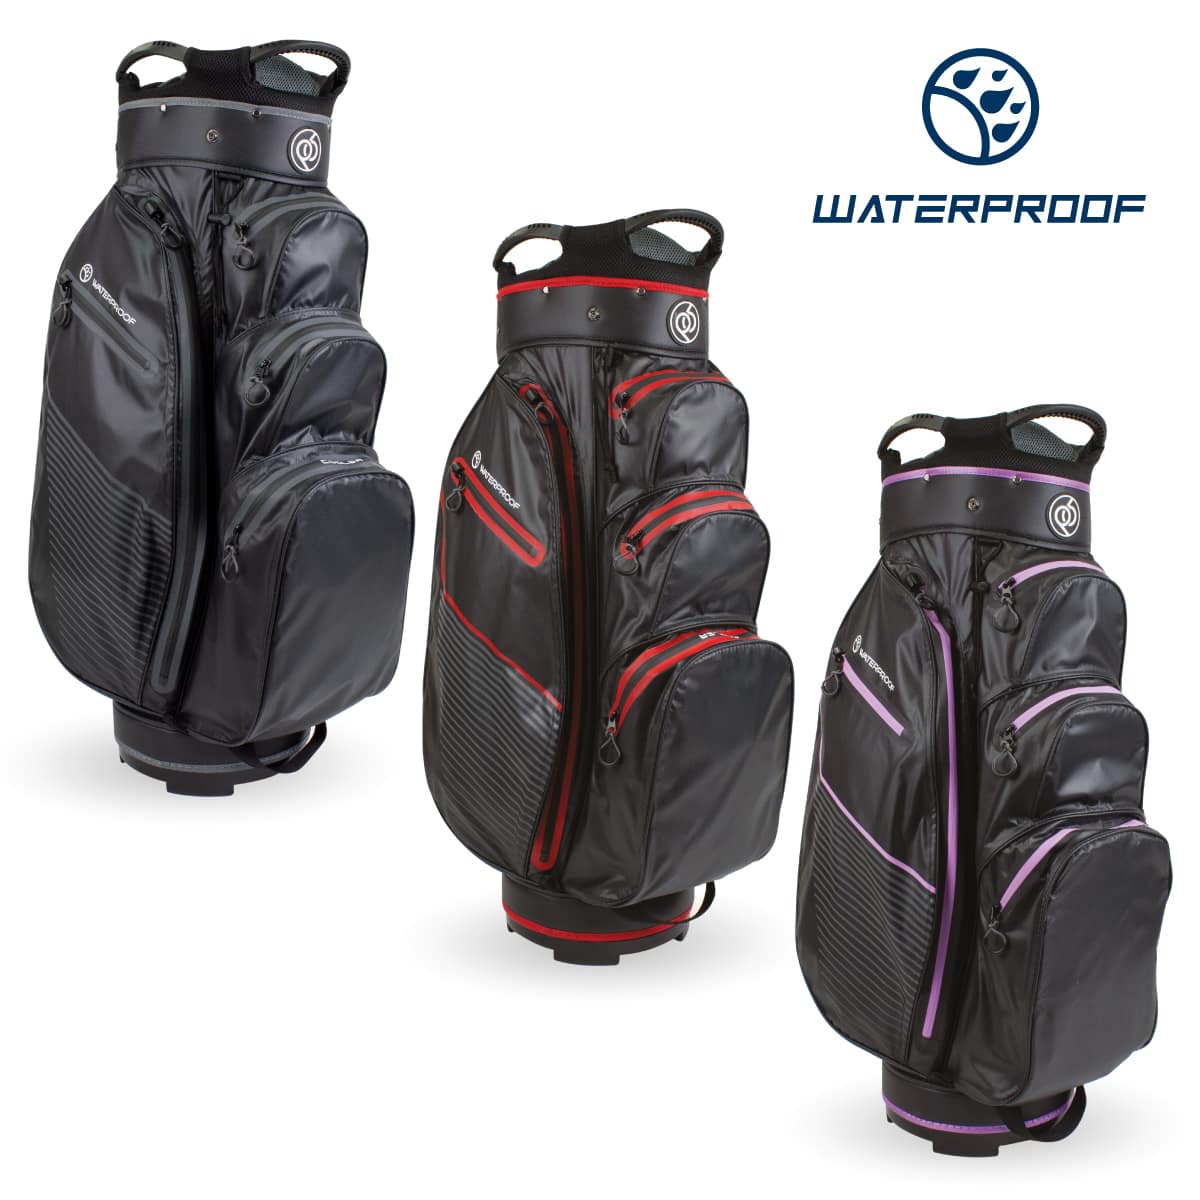 Waterproof Cart - Bag PowerBug Black/Charcoal